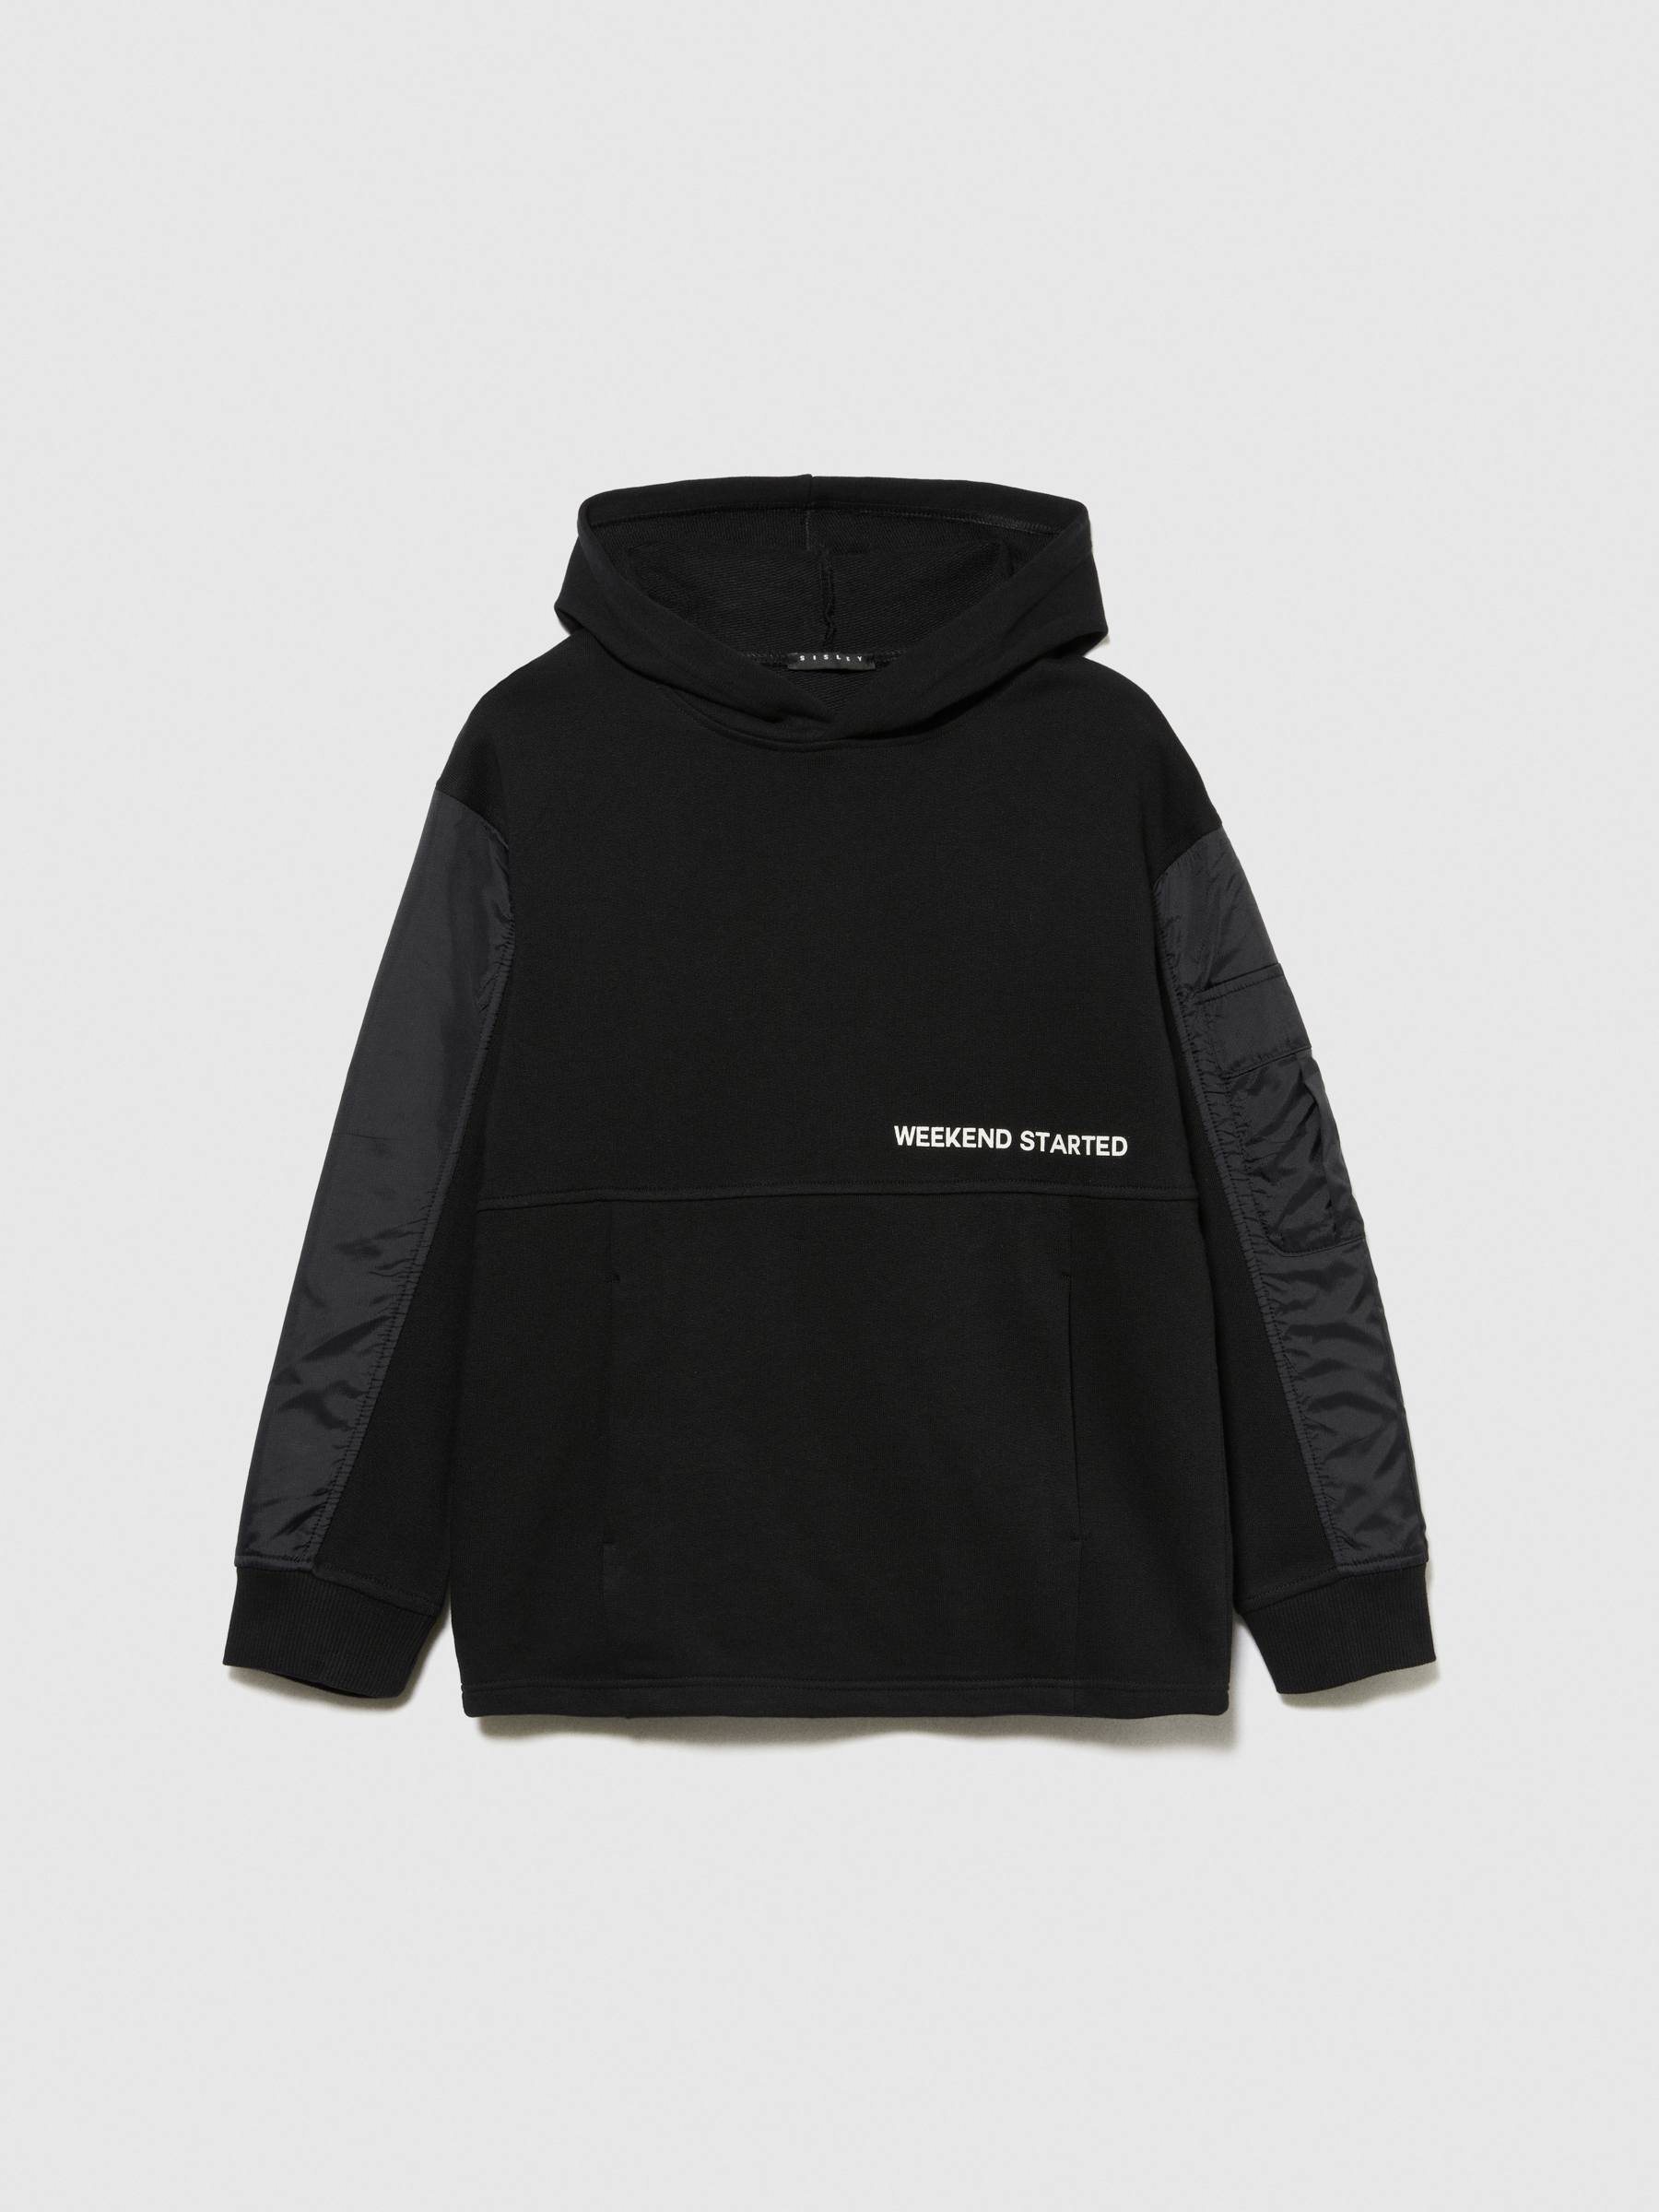 Sisley Young - Mixed Material Sweatshirt With Maxi Print, Man, Black, Size: XL